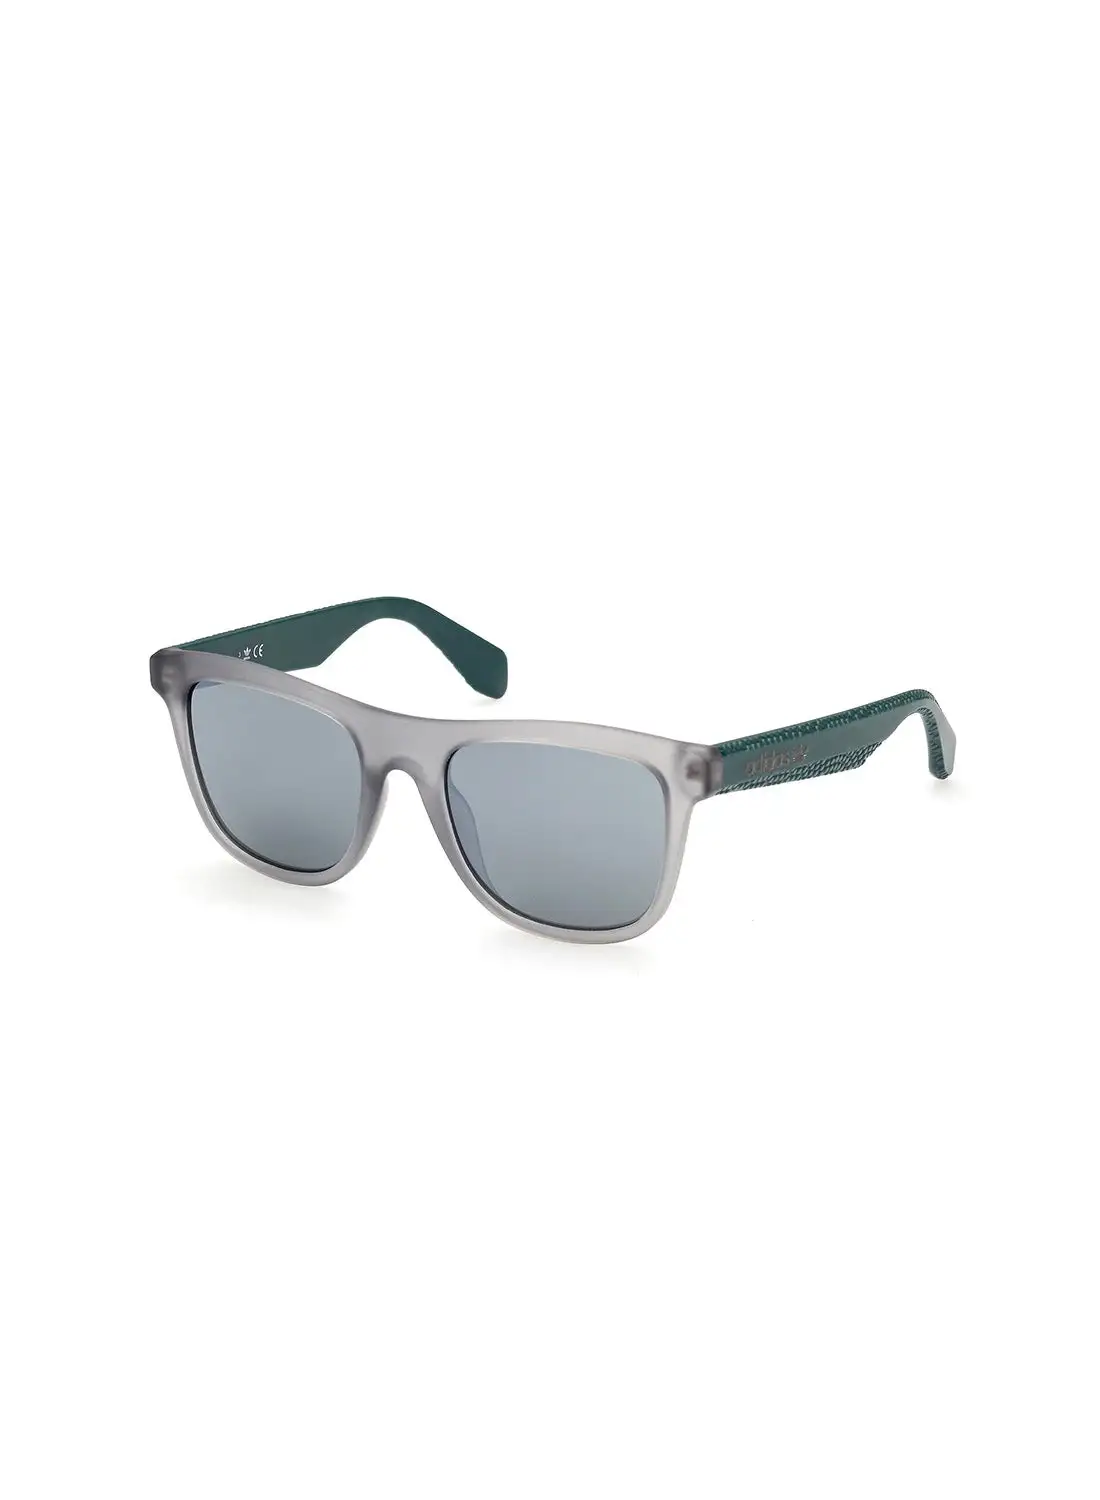 Adidas Unisex UV Protection Navigator Sunglasses - OR005720Q53 - Lens Size: 53 Mm